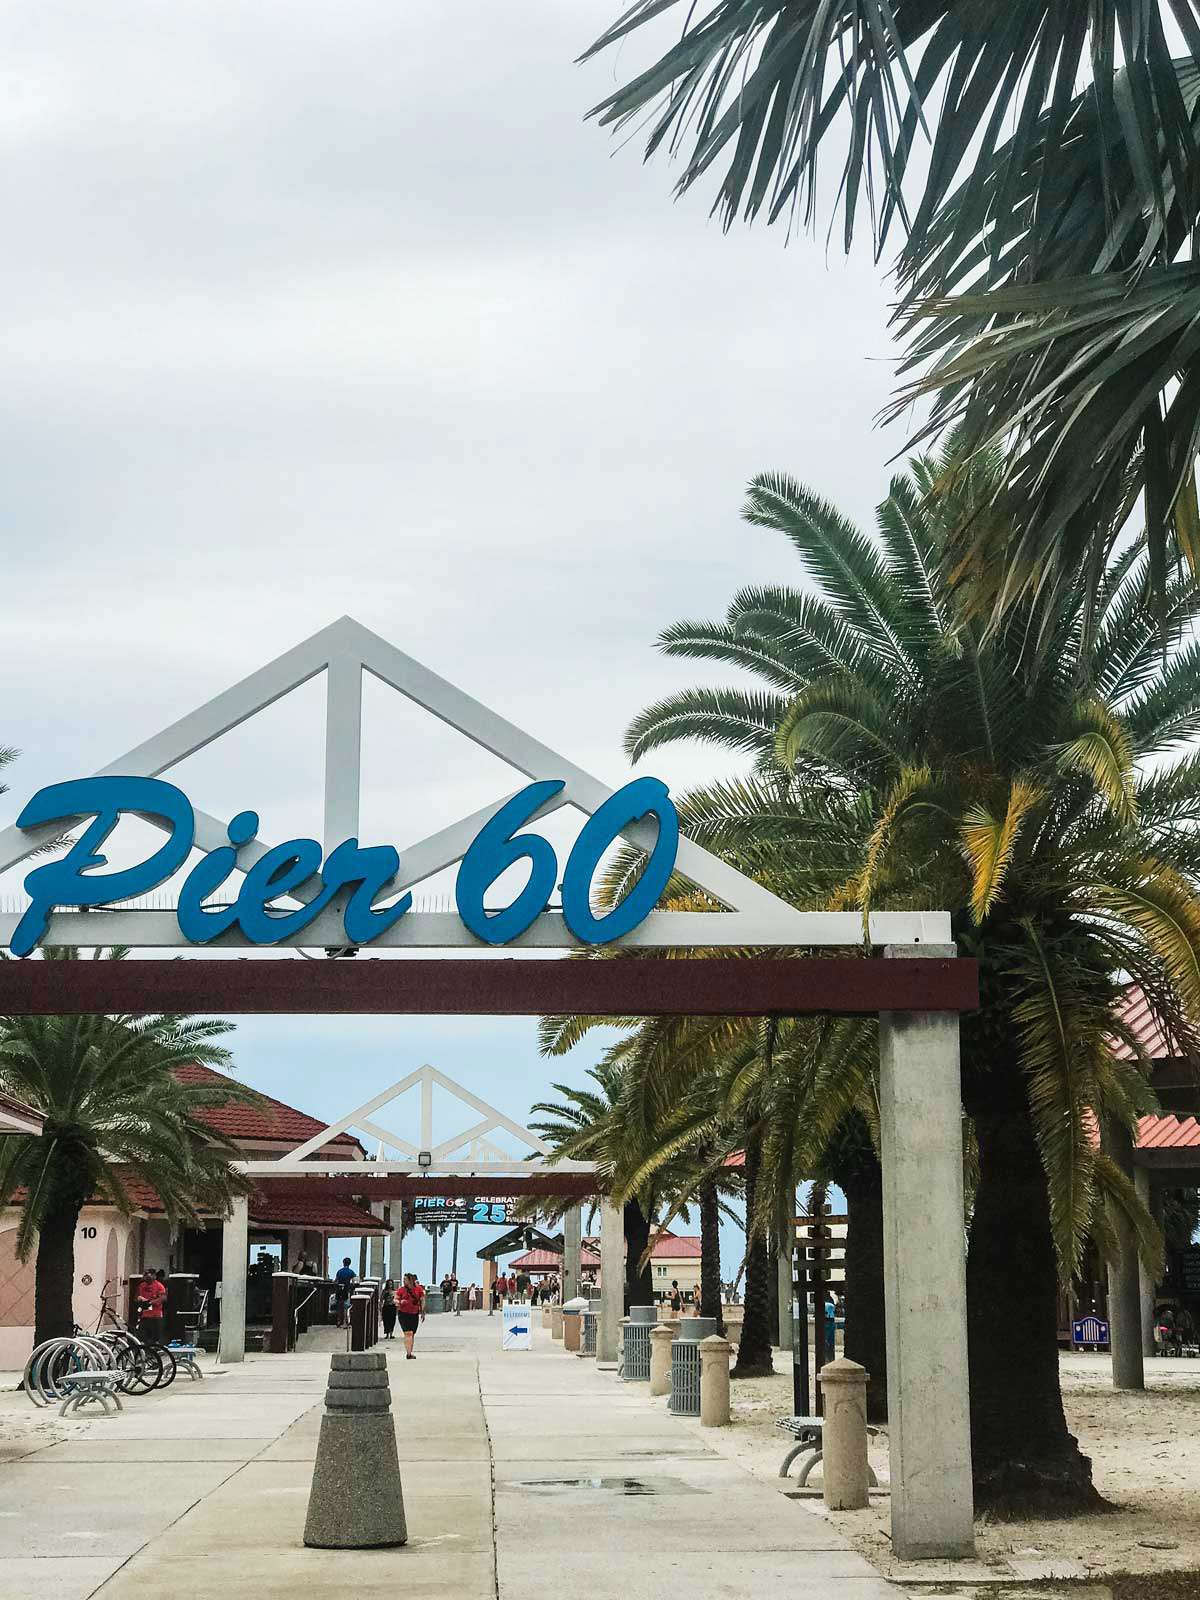 Pier 60 Clearwater Beach, Florida